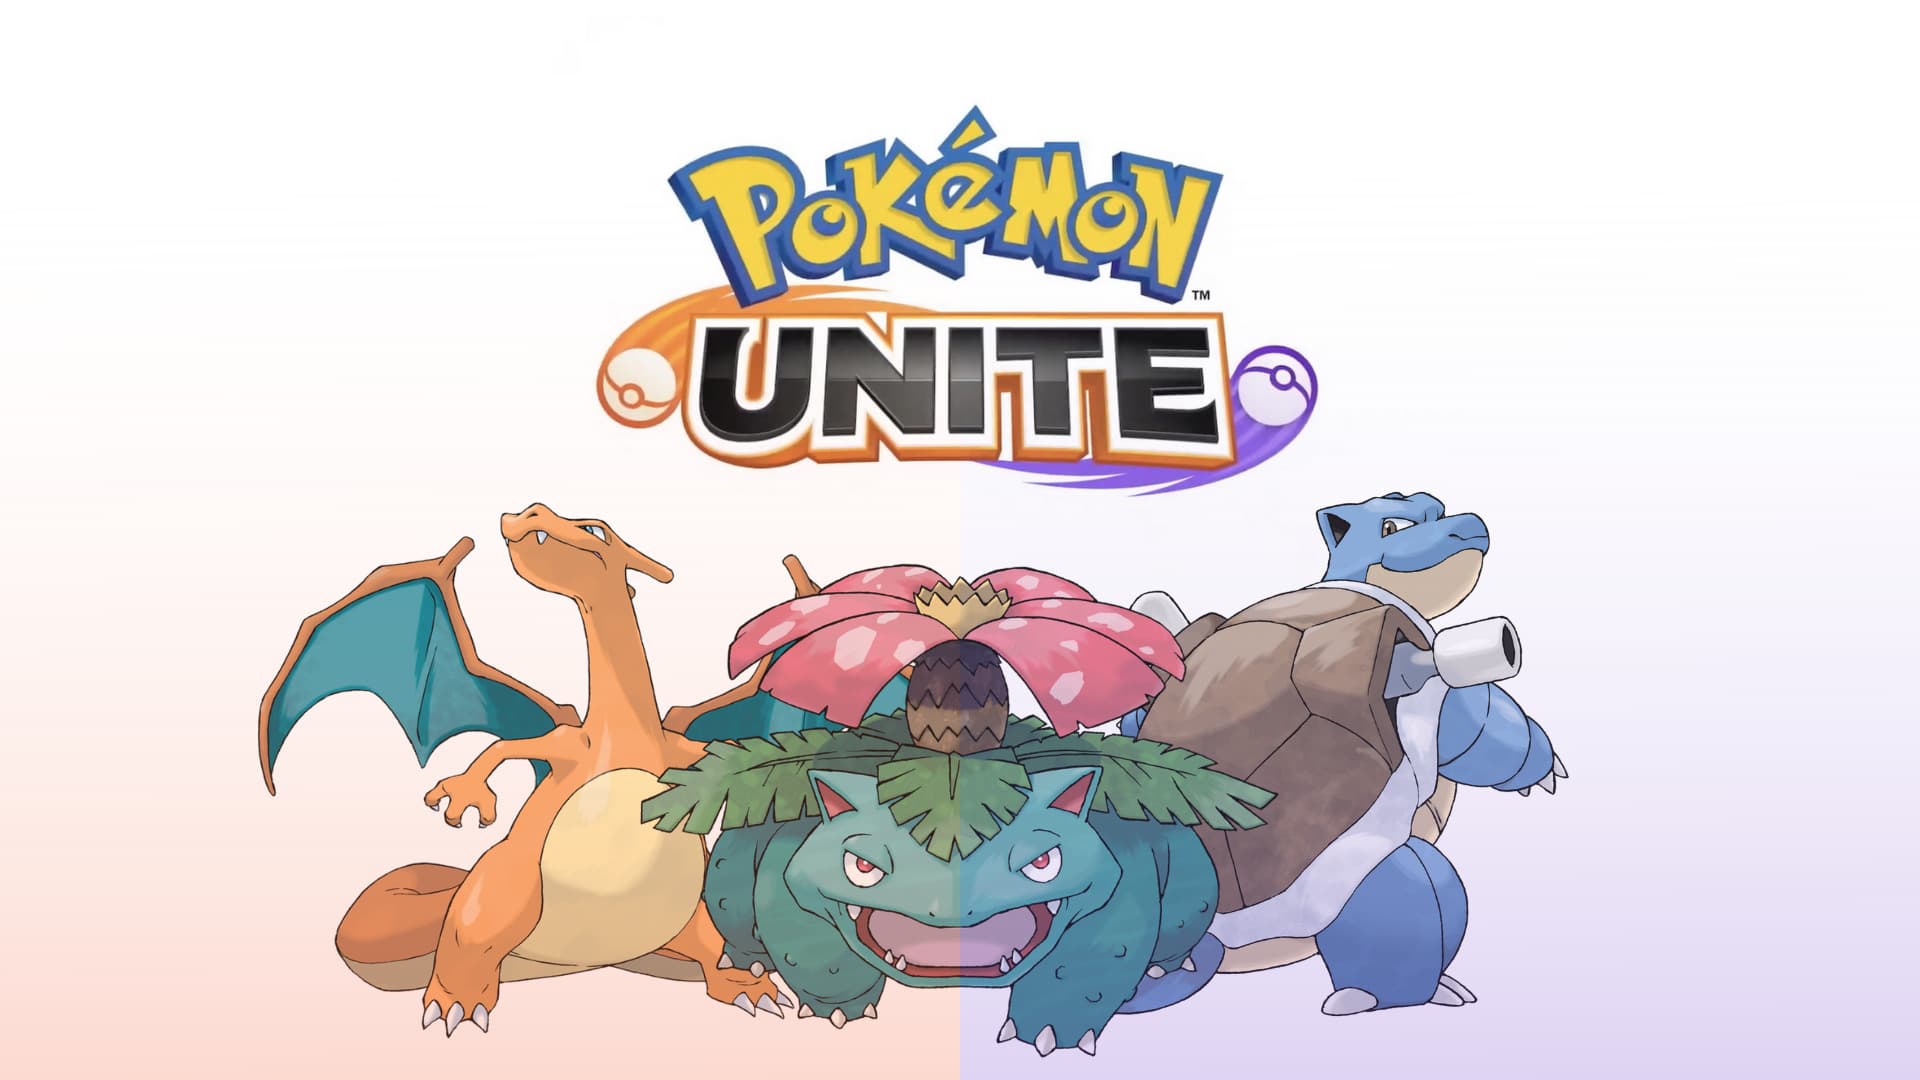 Pokemon Unite details leaked online - Nintendo Switch News ...